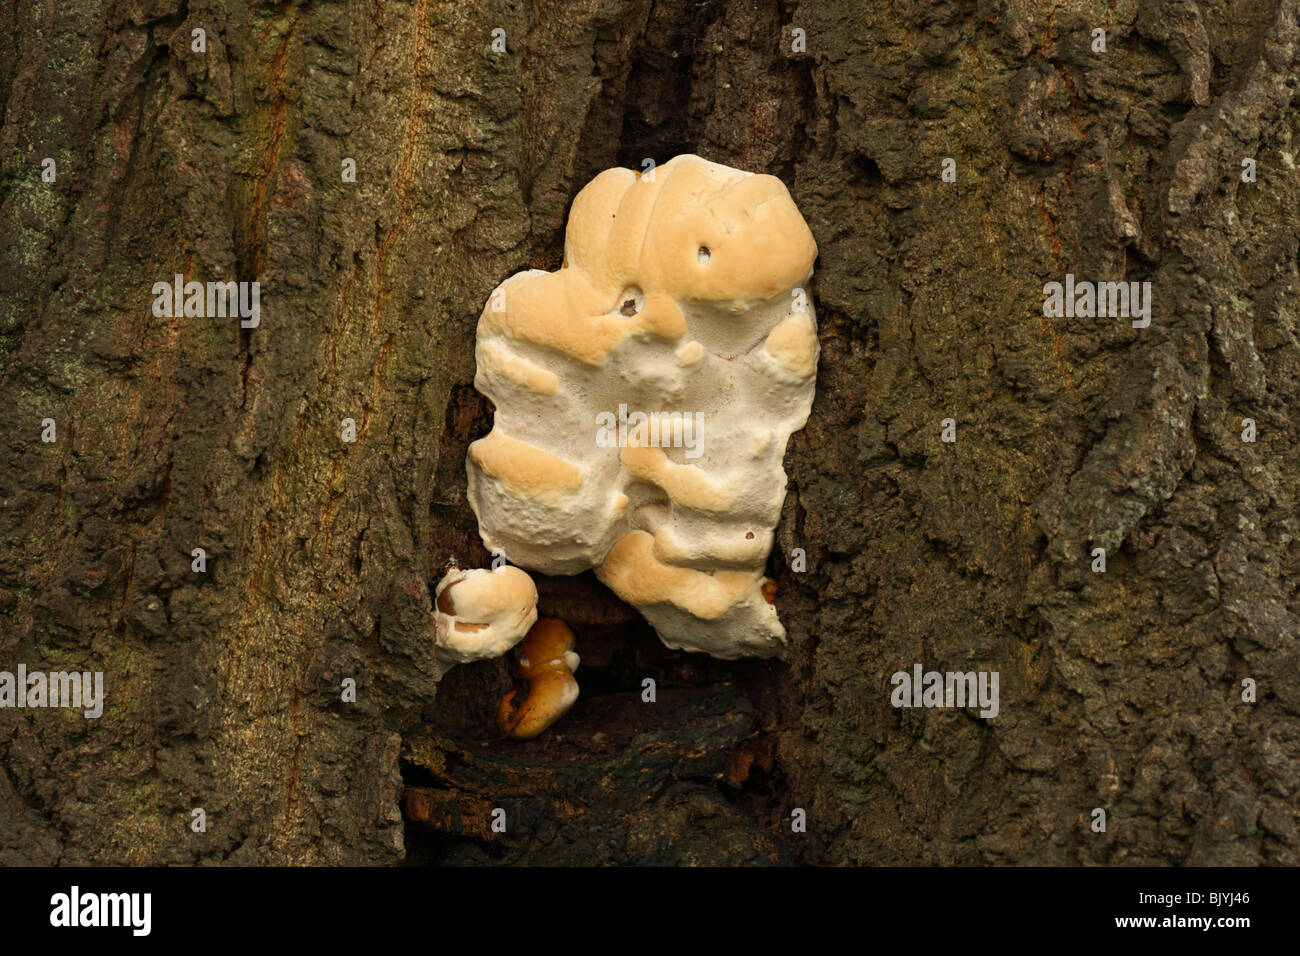 Fungus, Fungi, Growing on a Tree Stump Stock Photo